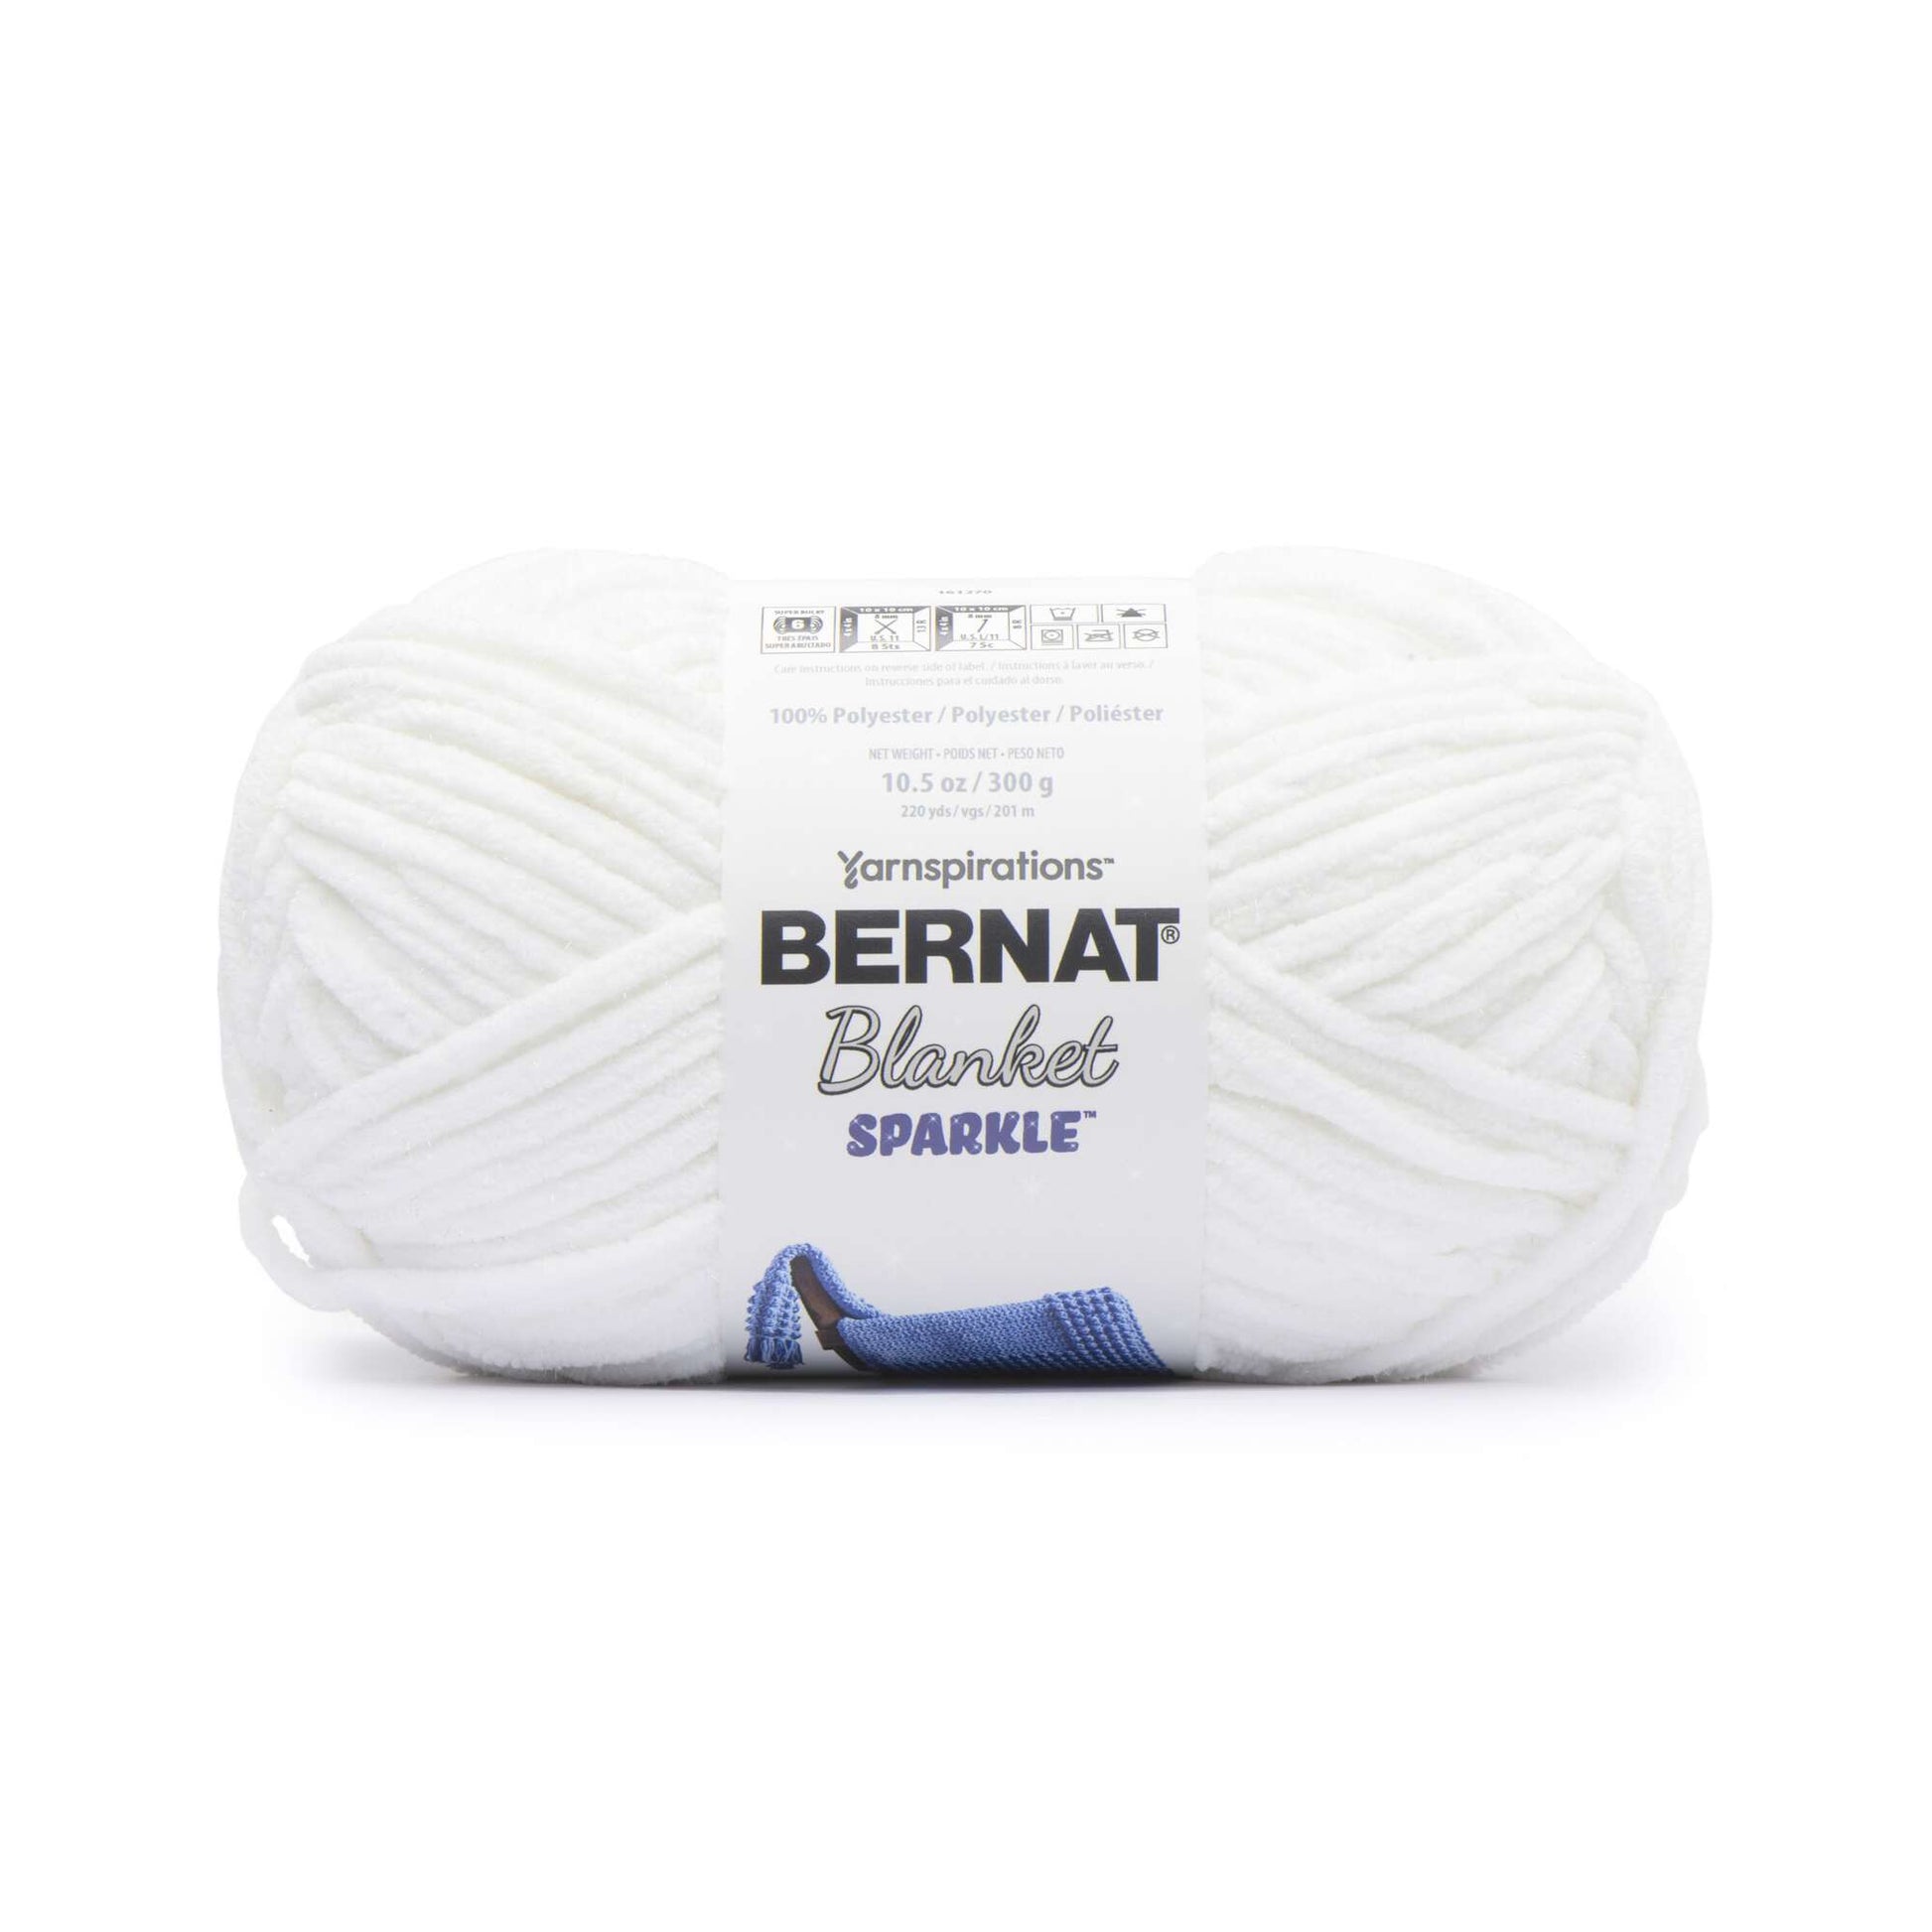 Bernat Blanket Sparkle Yarn (300g/10.5oz) | Yarnspirations